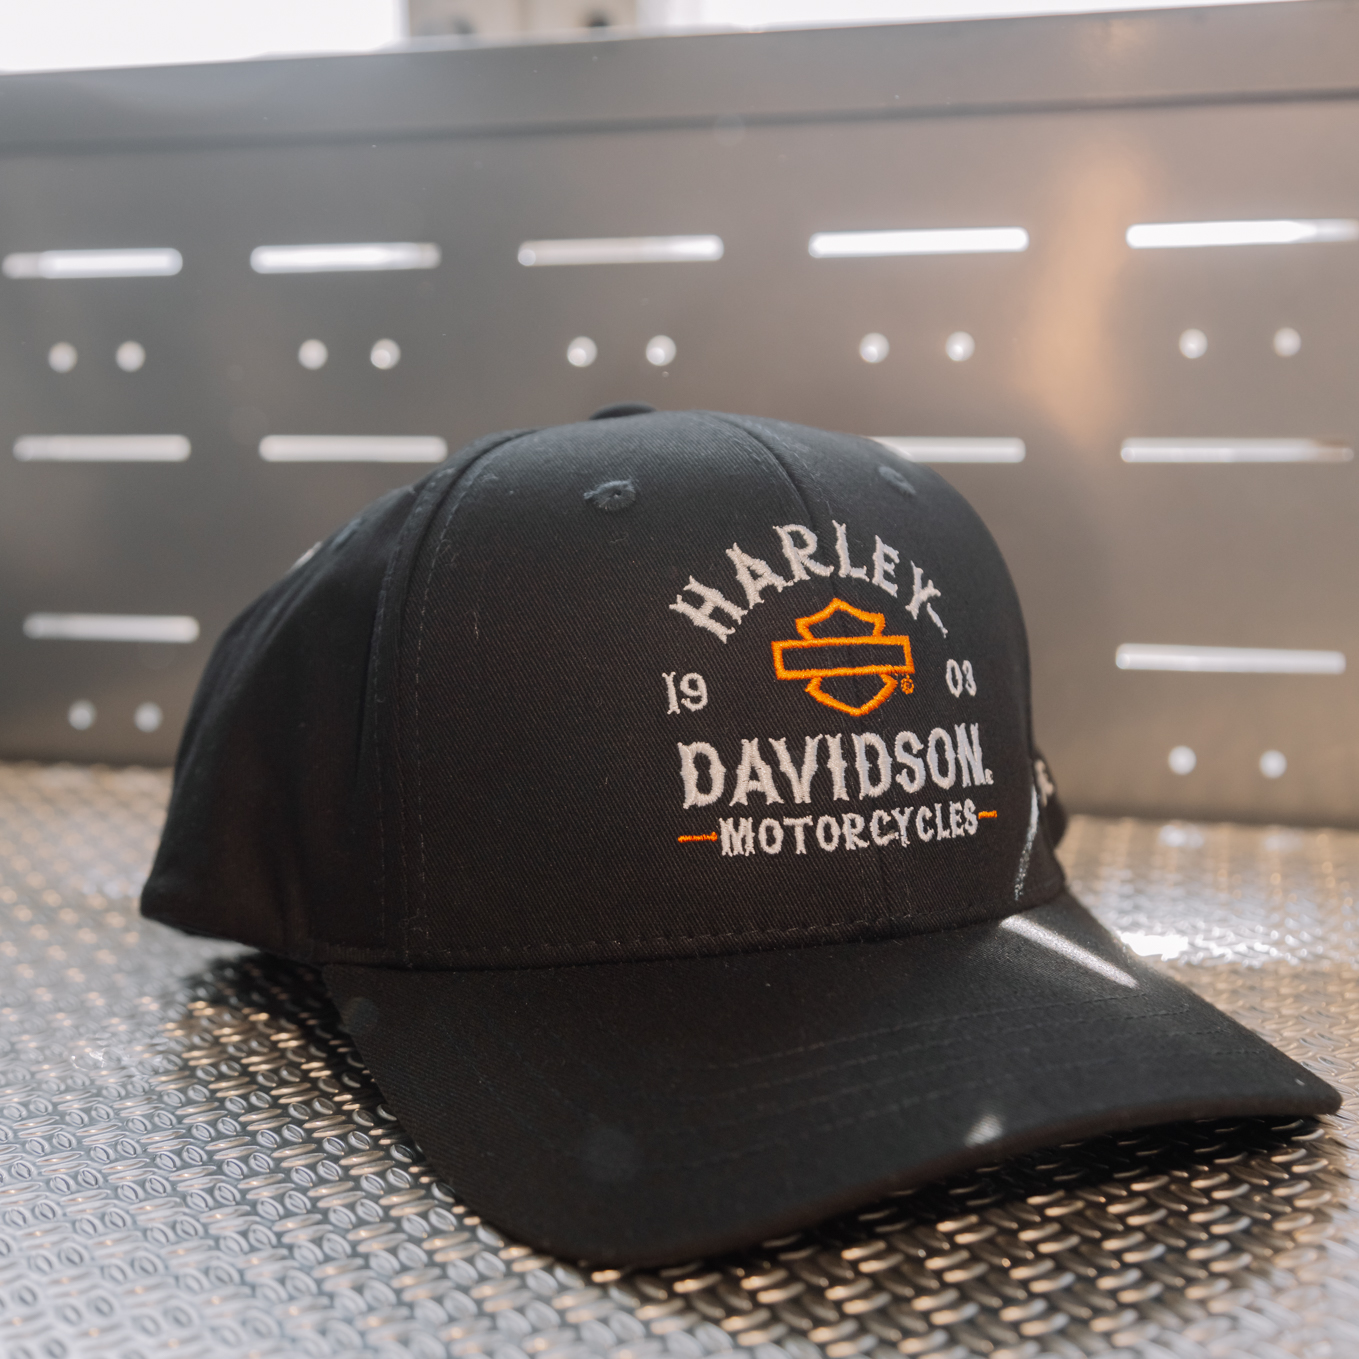 Harley-Davidson Helsinki Dealer Rivalry Cap